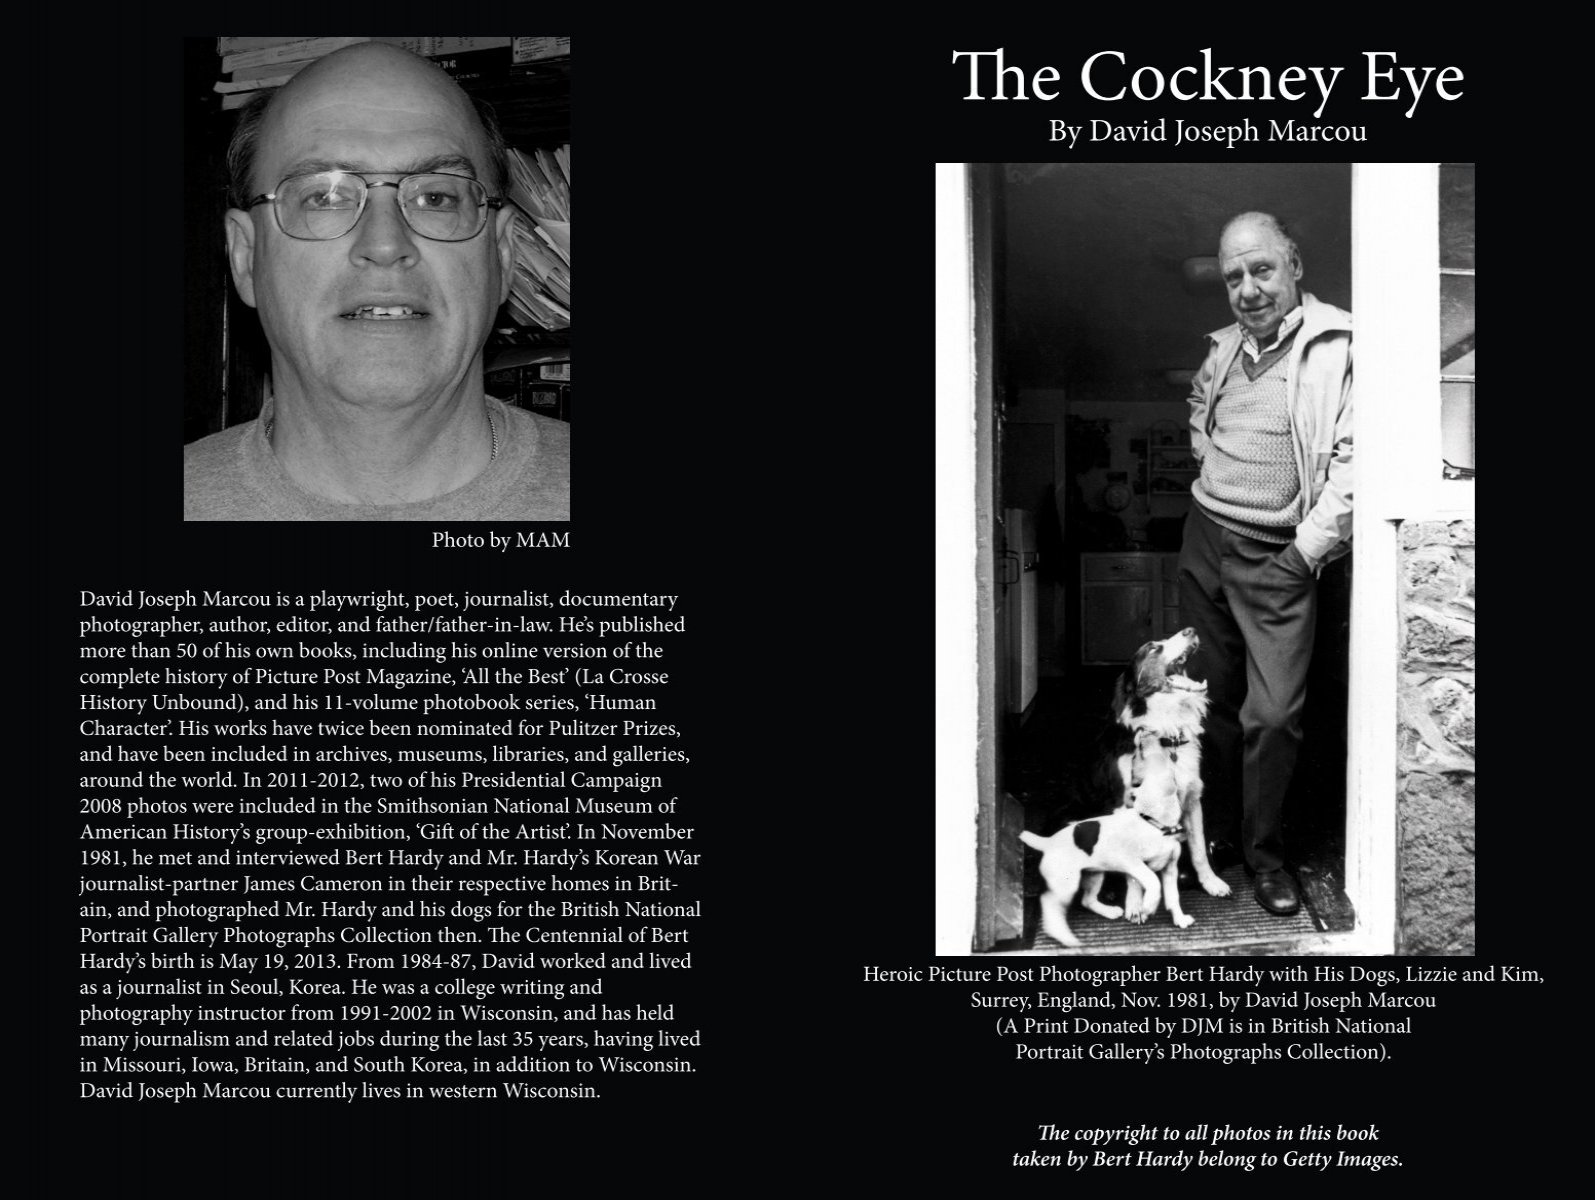 The Cockney Eye: Bert Hardy - La Crosse History Unbound